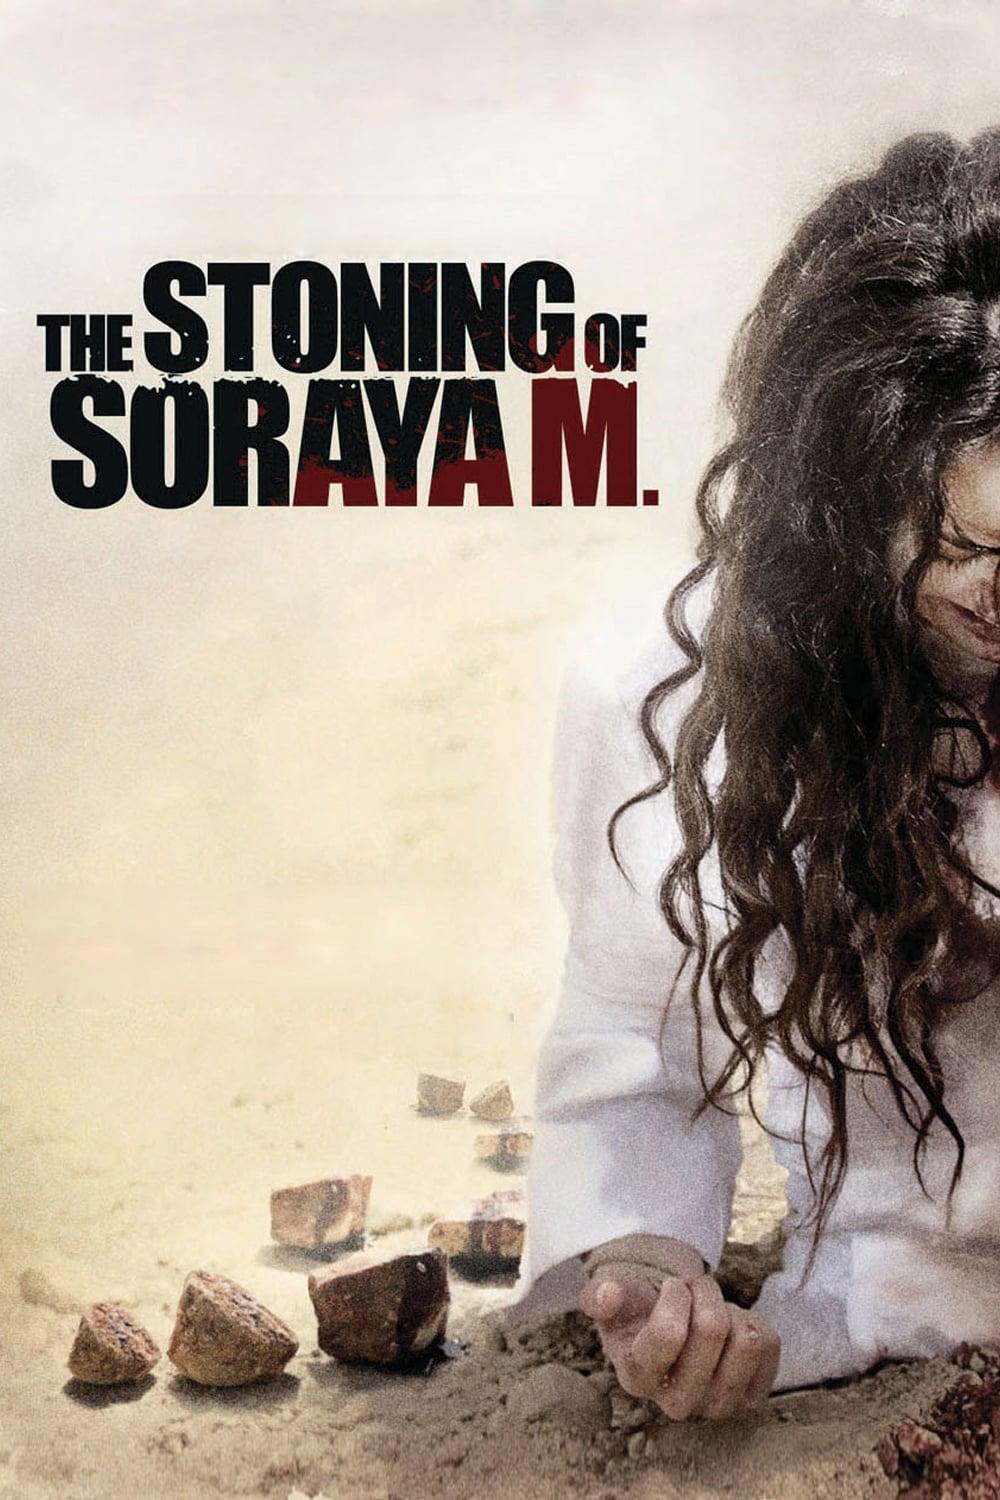 The Stoning of Soraya M. poster